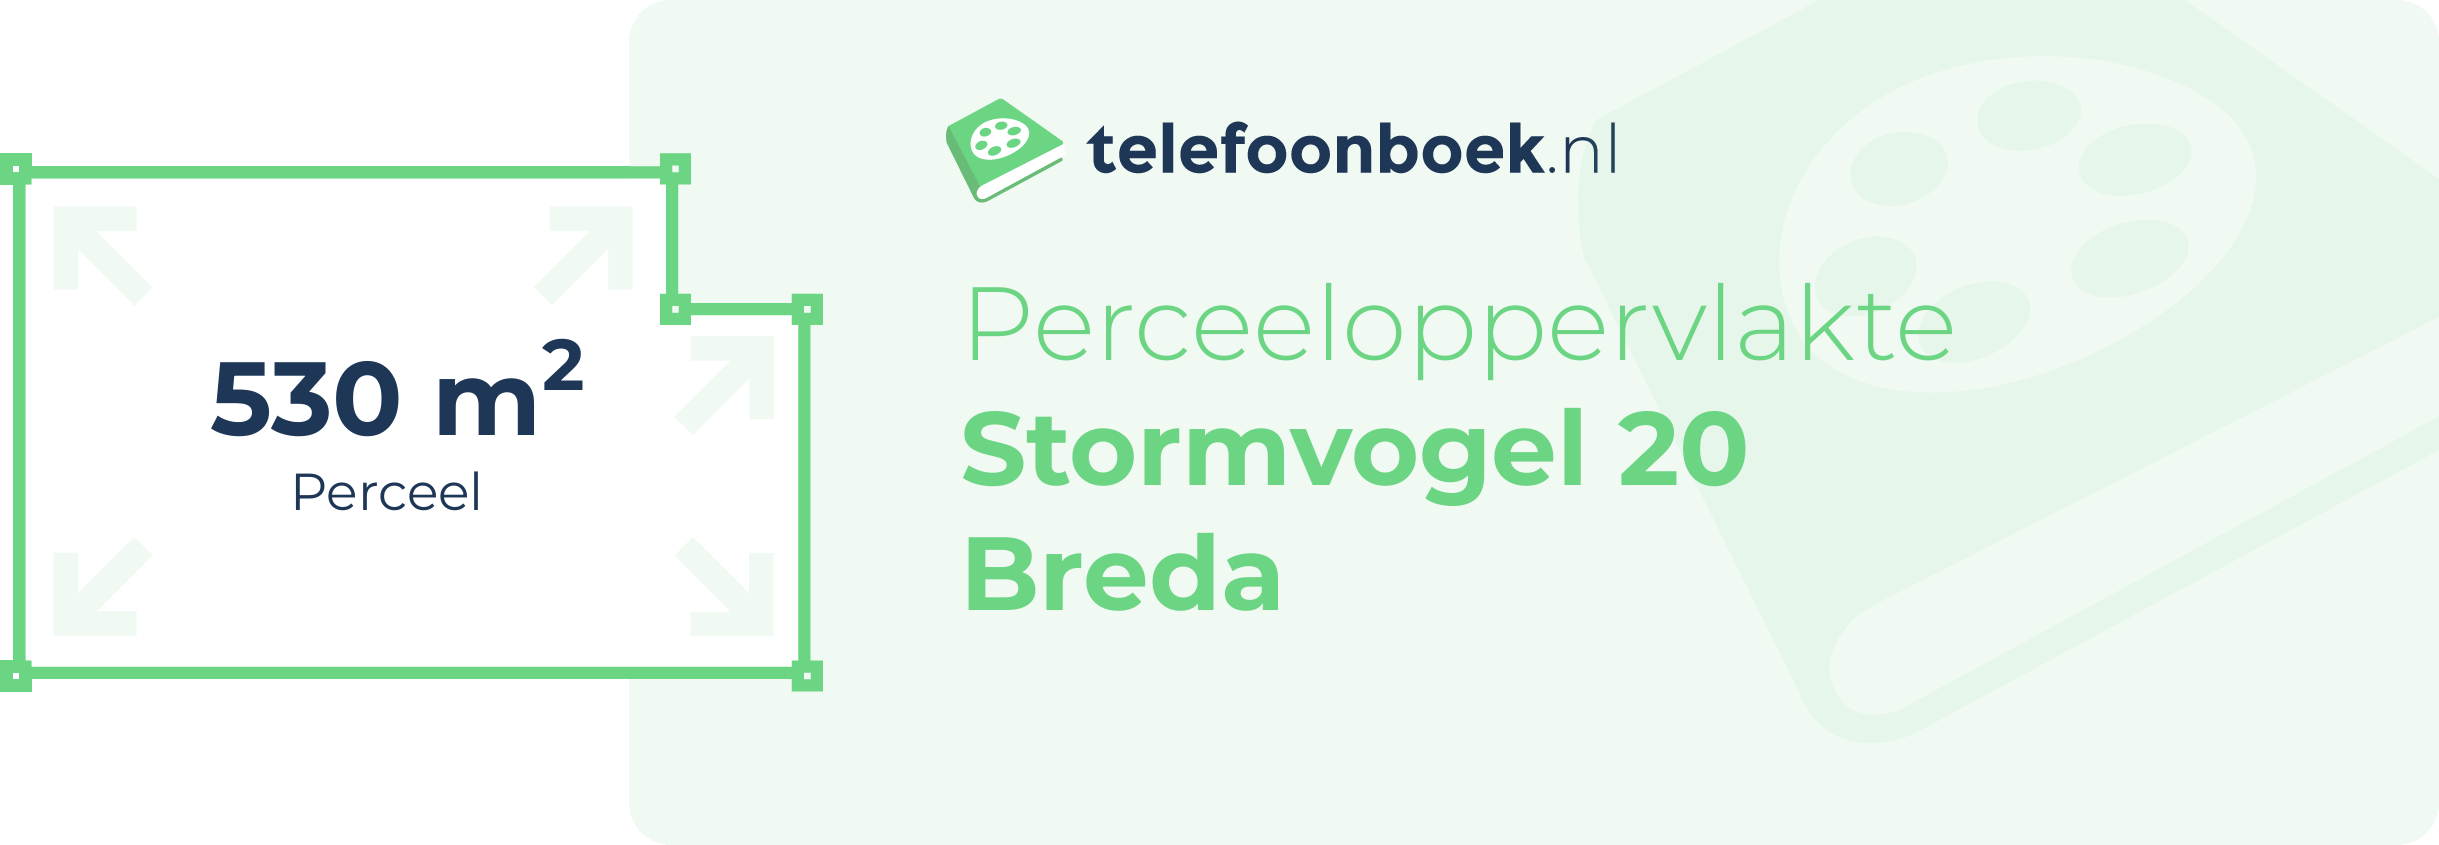 Perceeloppervlakte Stormvogel 20 Breda